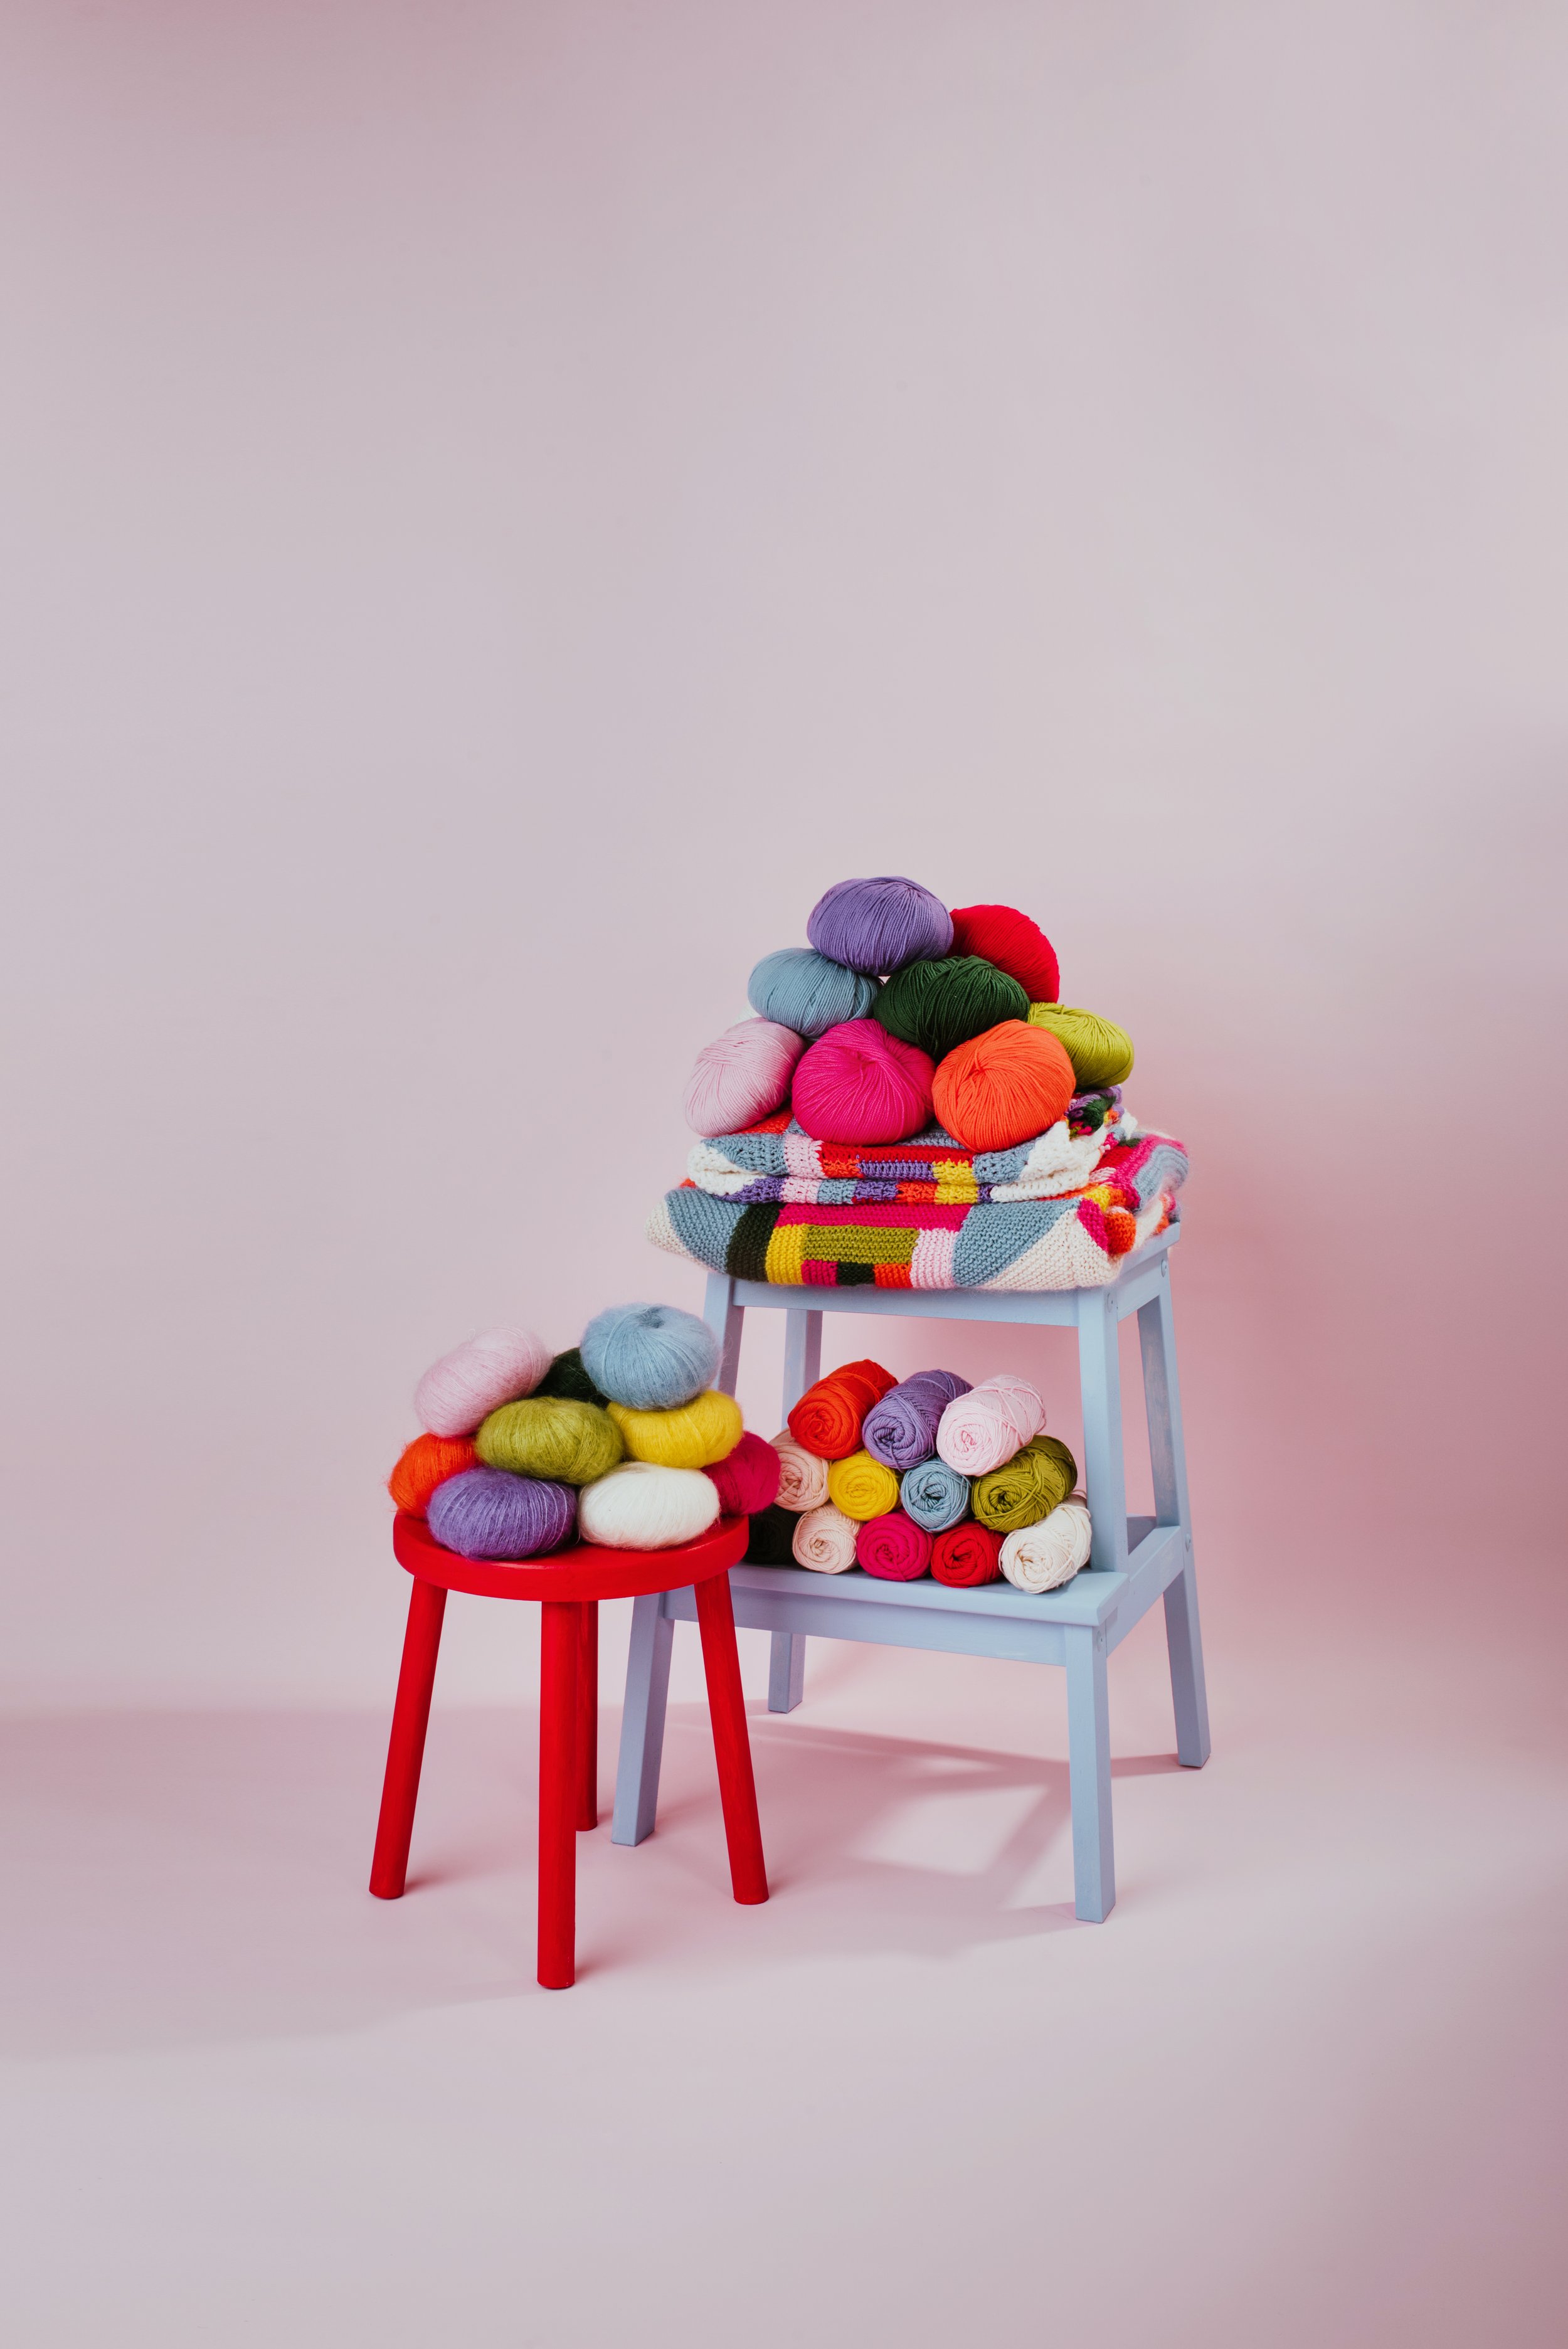 crochet_knit kits with samples_RMP_4883.jpg